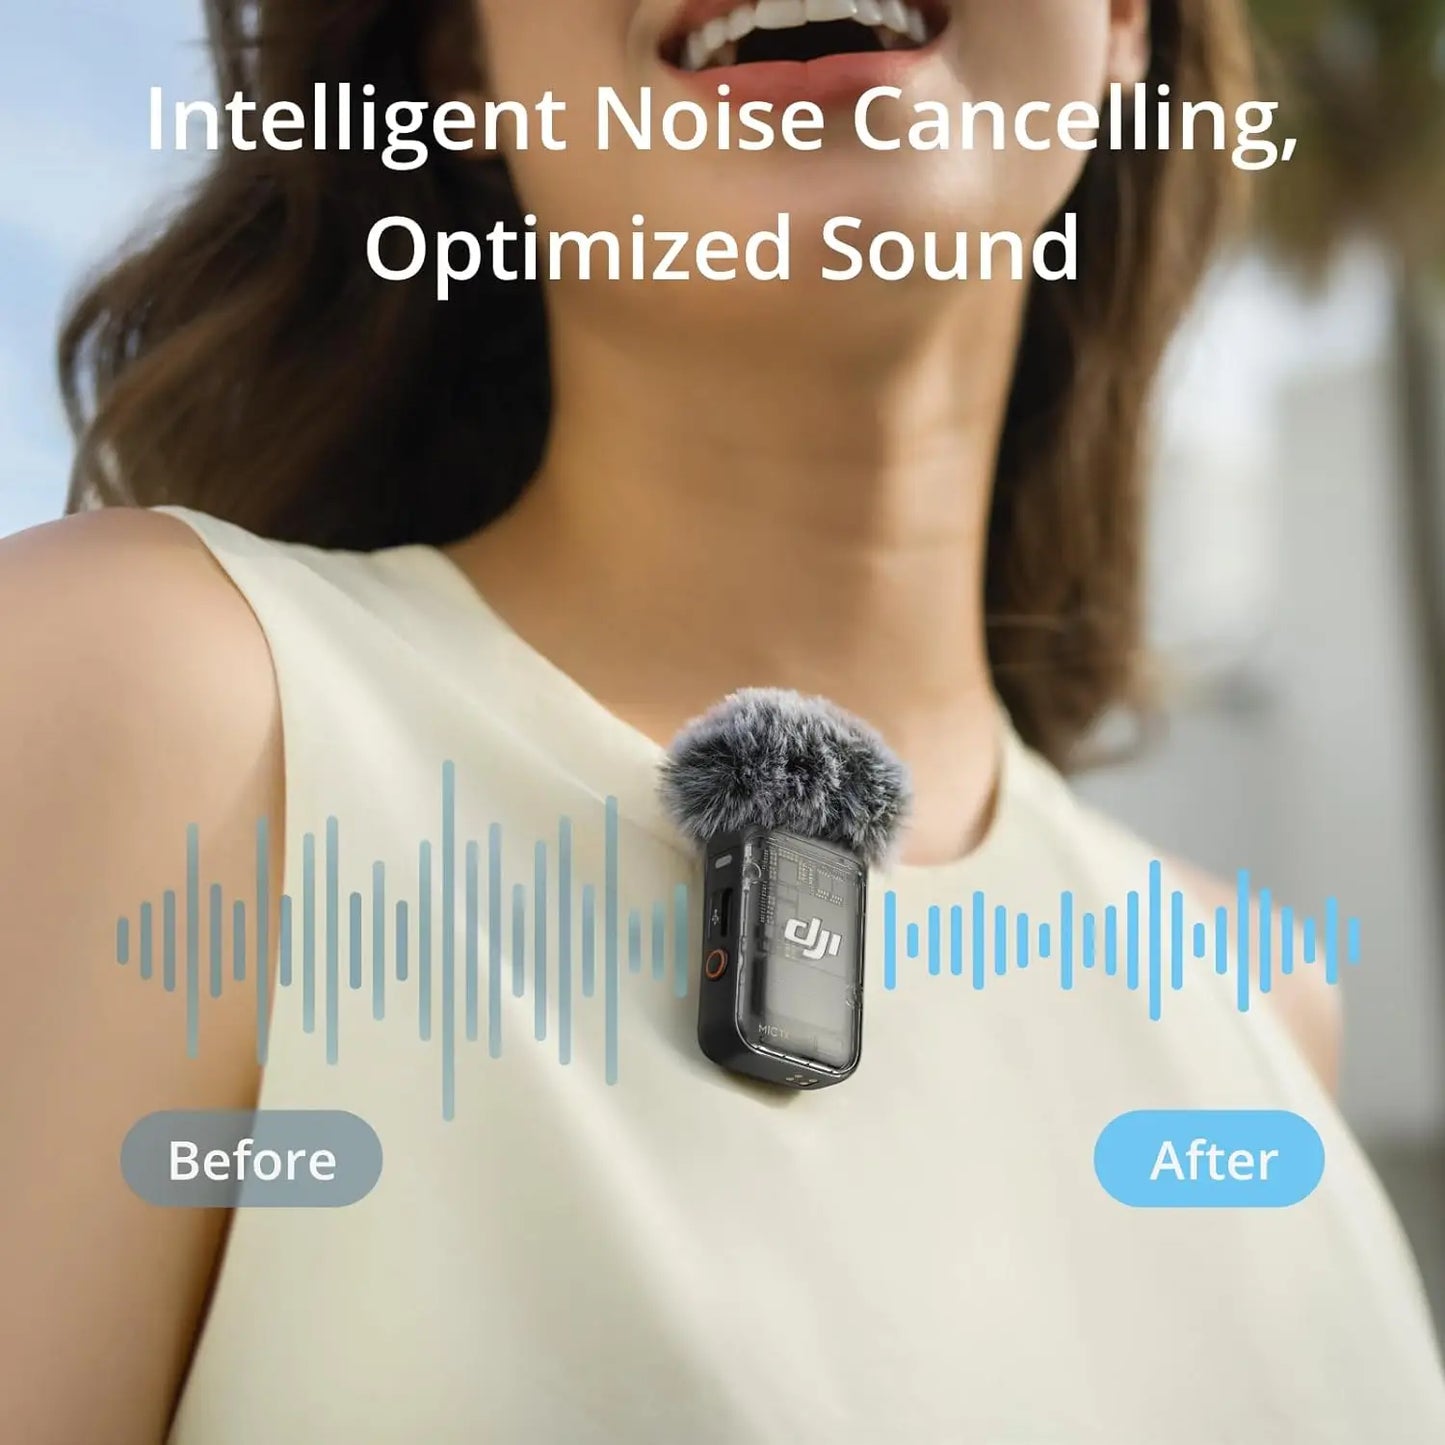 DJI Mic 2  Wireless Microphone with Intelligent Noise Cancelling 32-bit Float Internal Recording Optimized Sound 250m Range